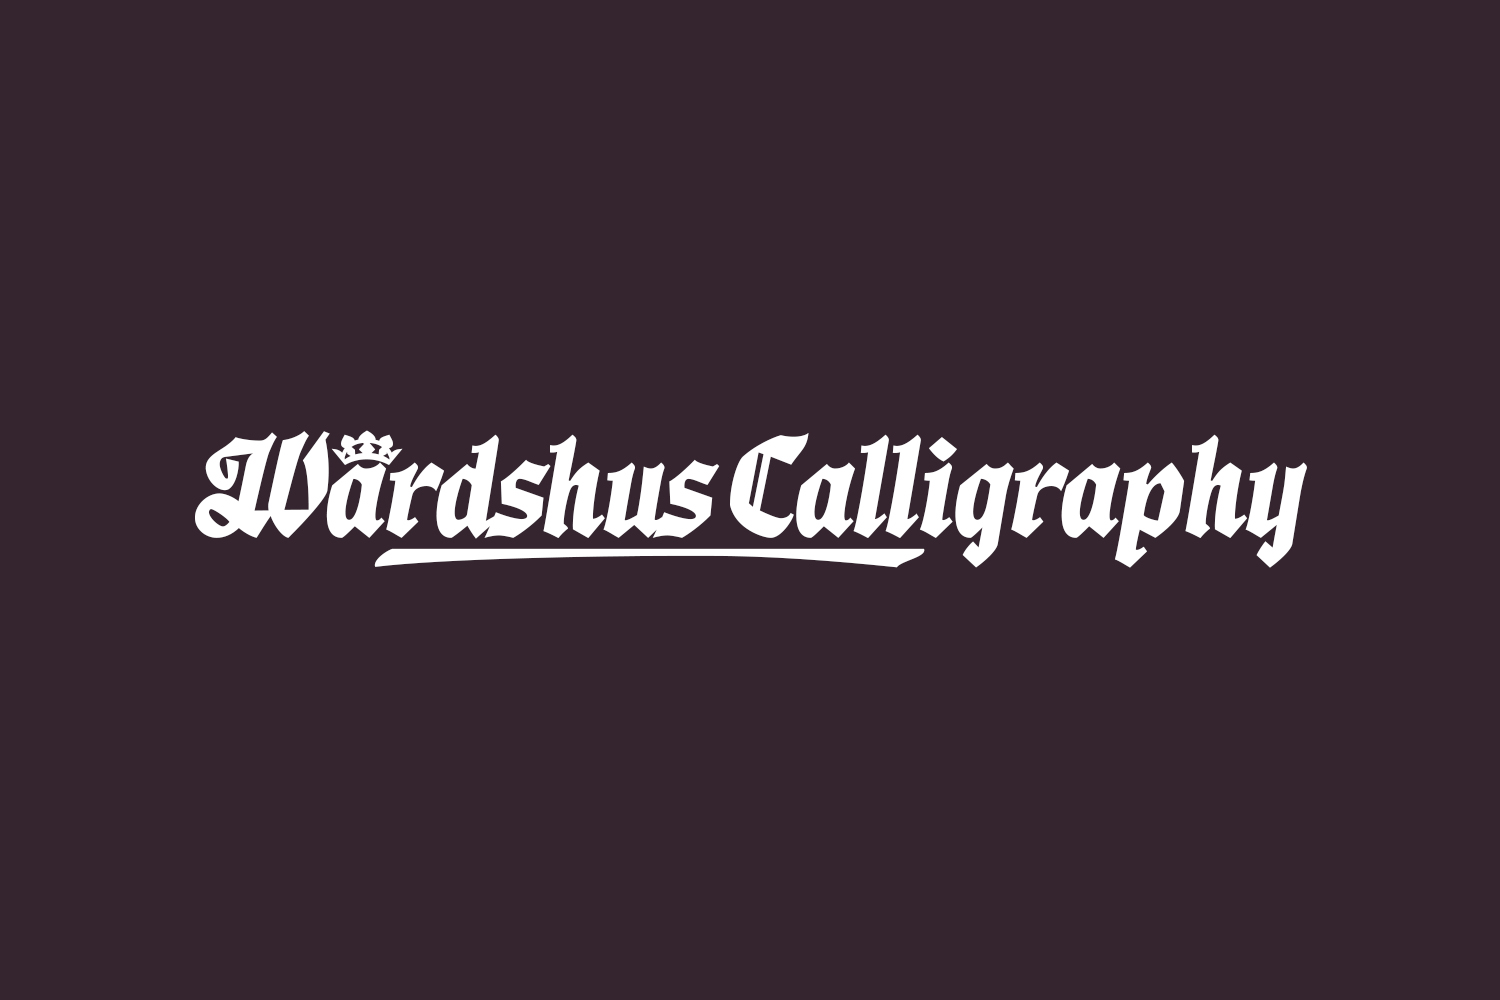 Wardshus Calligraphy Free Font